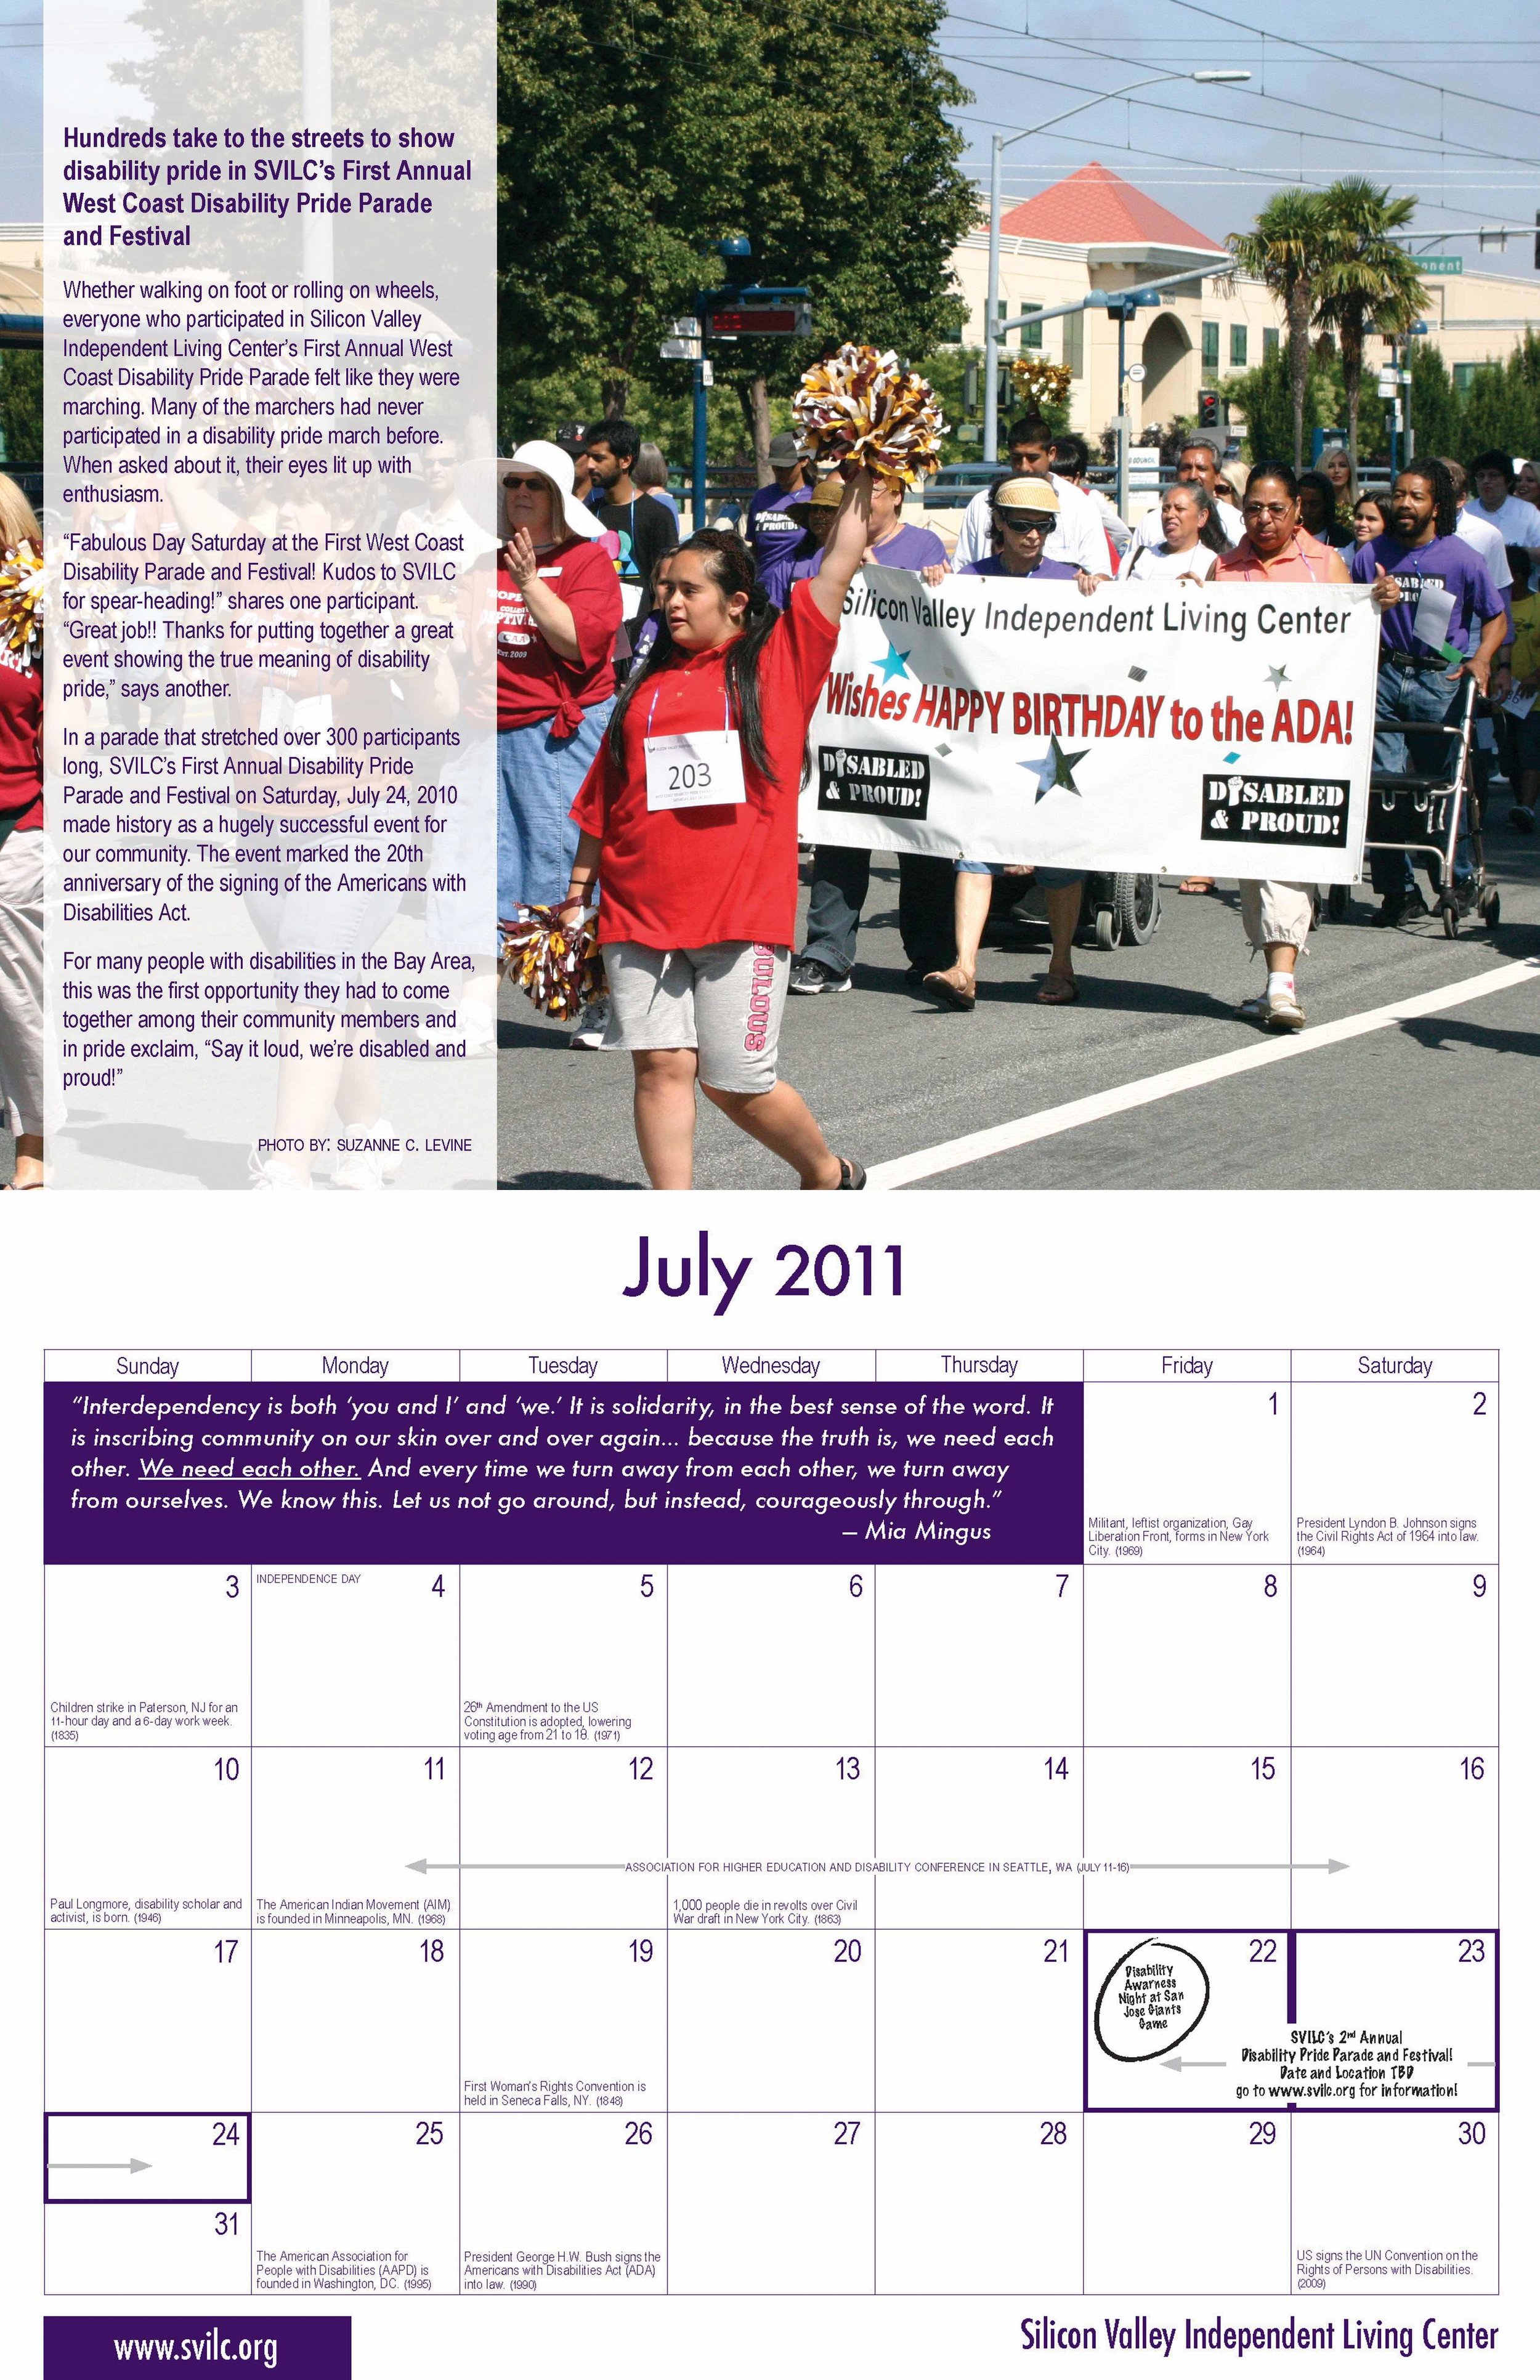   SVILC 2011 Calendar  July spread 